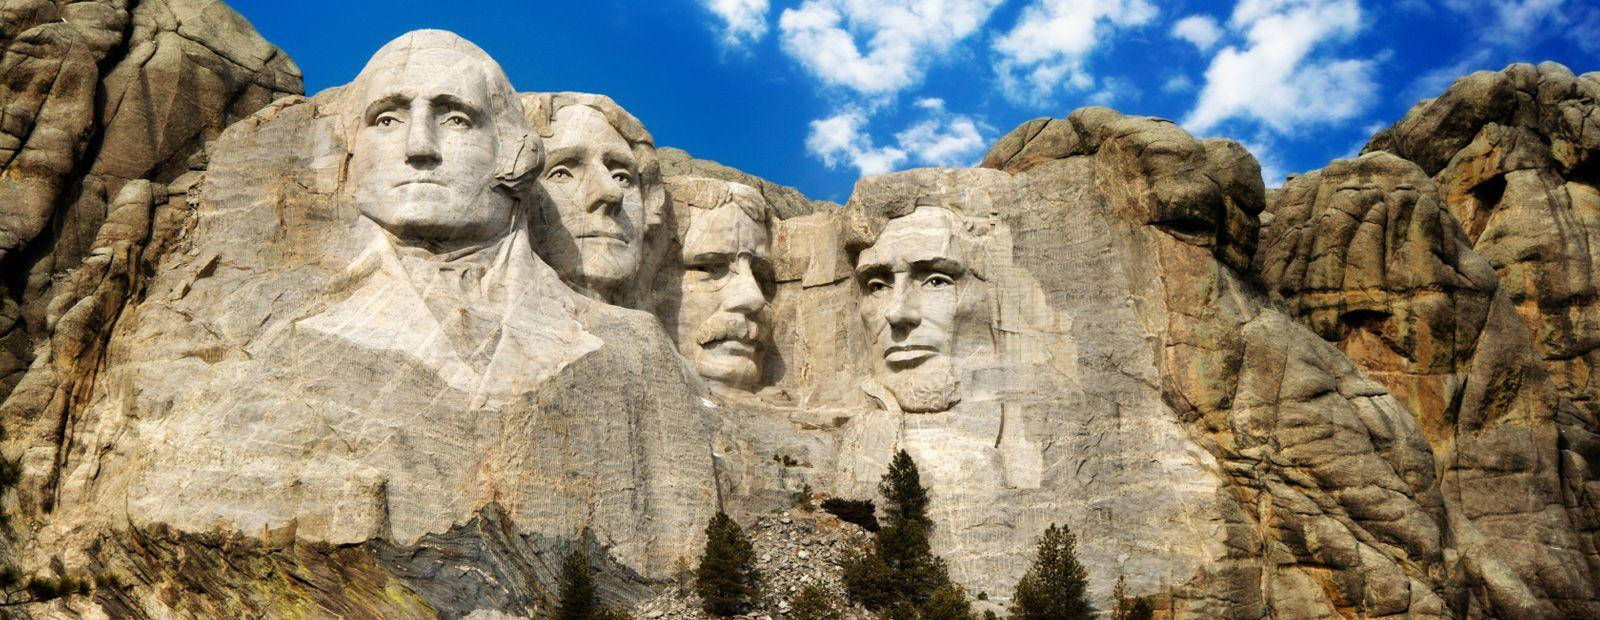 Mount Rushmore 1600 X 620 Wallpaper